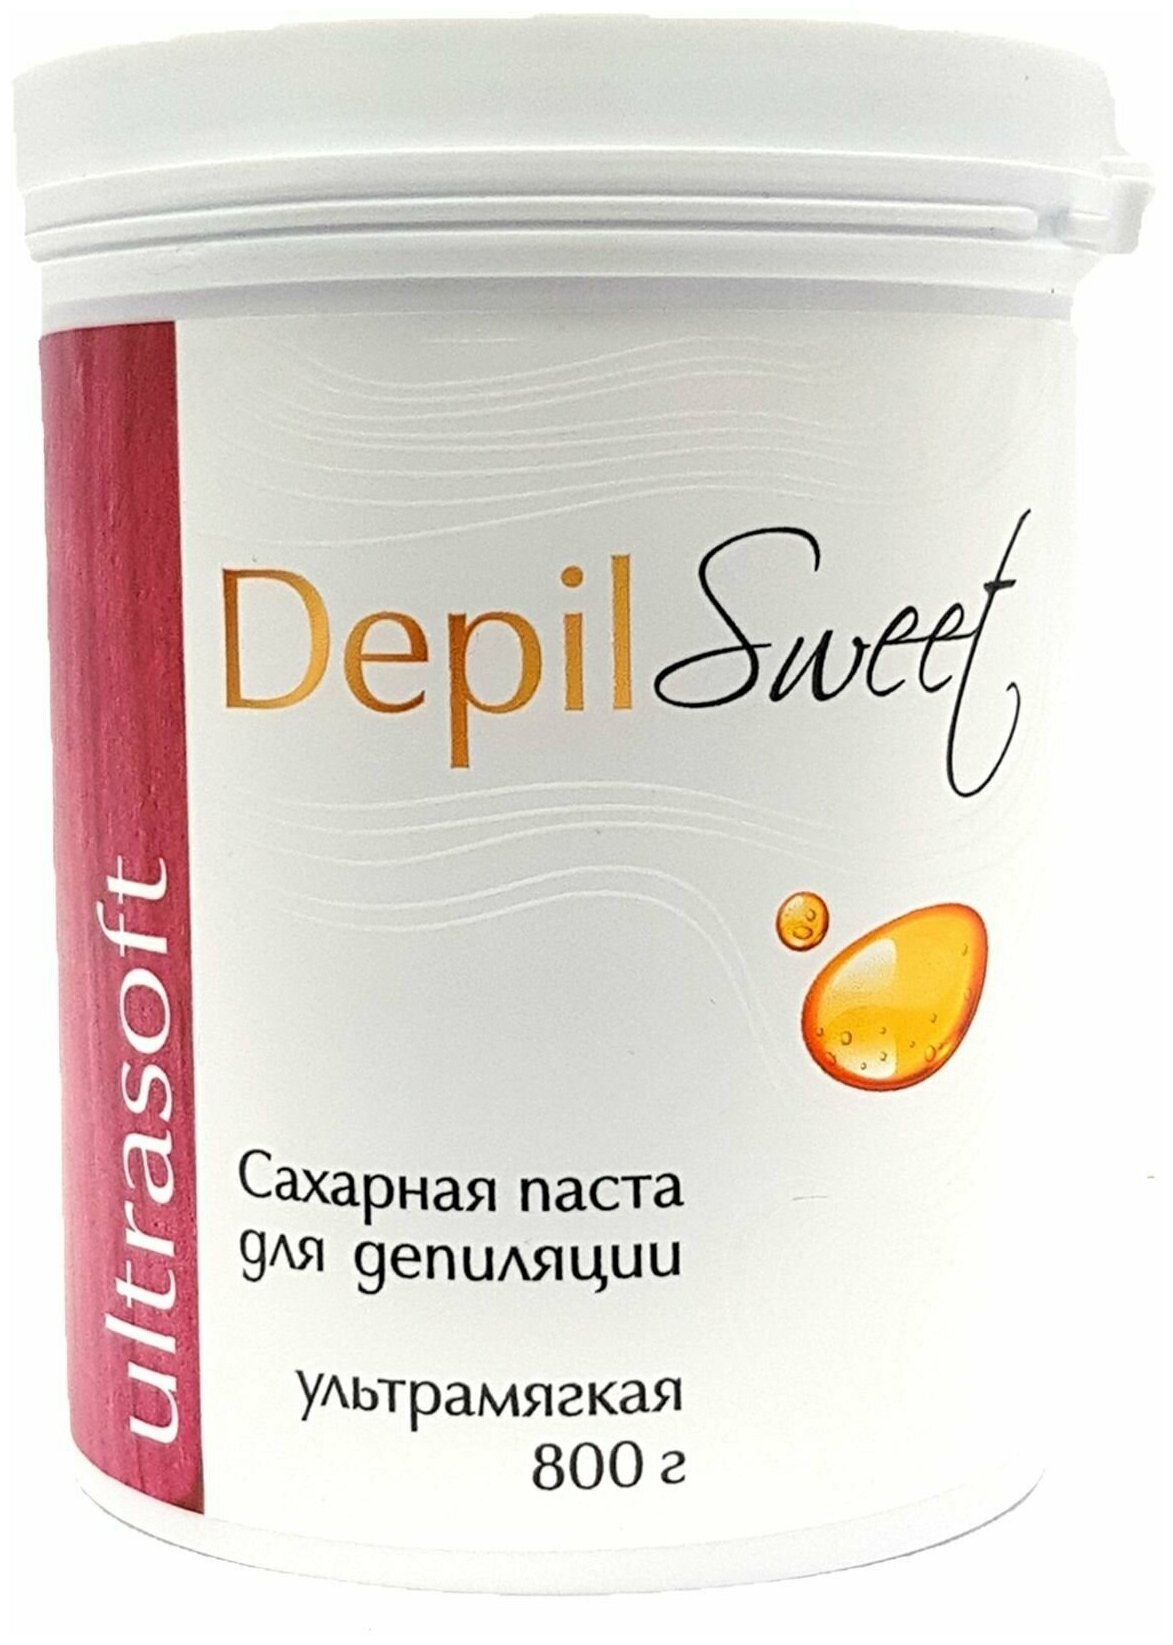 DepilSweet Сахарная паста для депиляции Ультрамягкая, 800г бионатуральный шугаринг